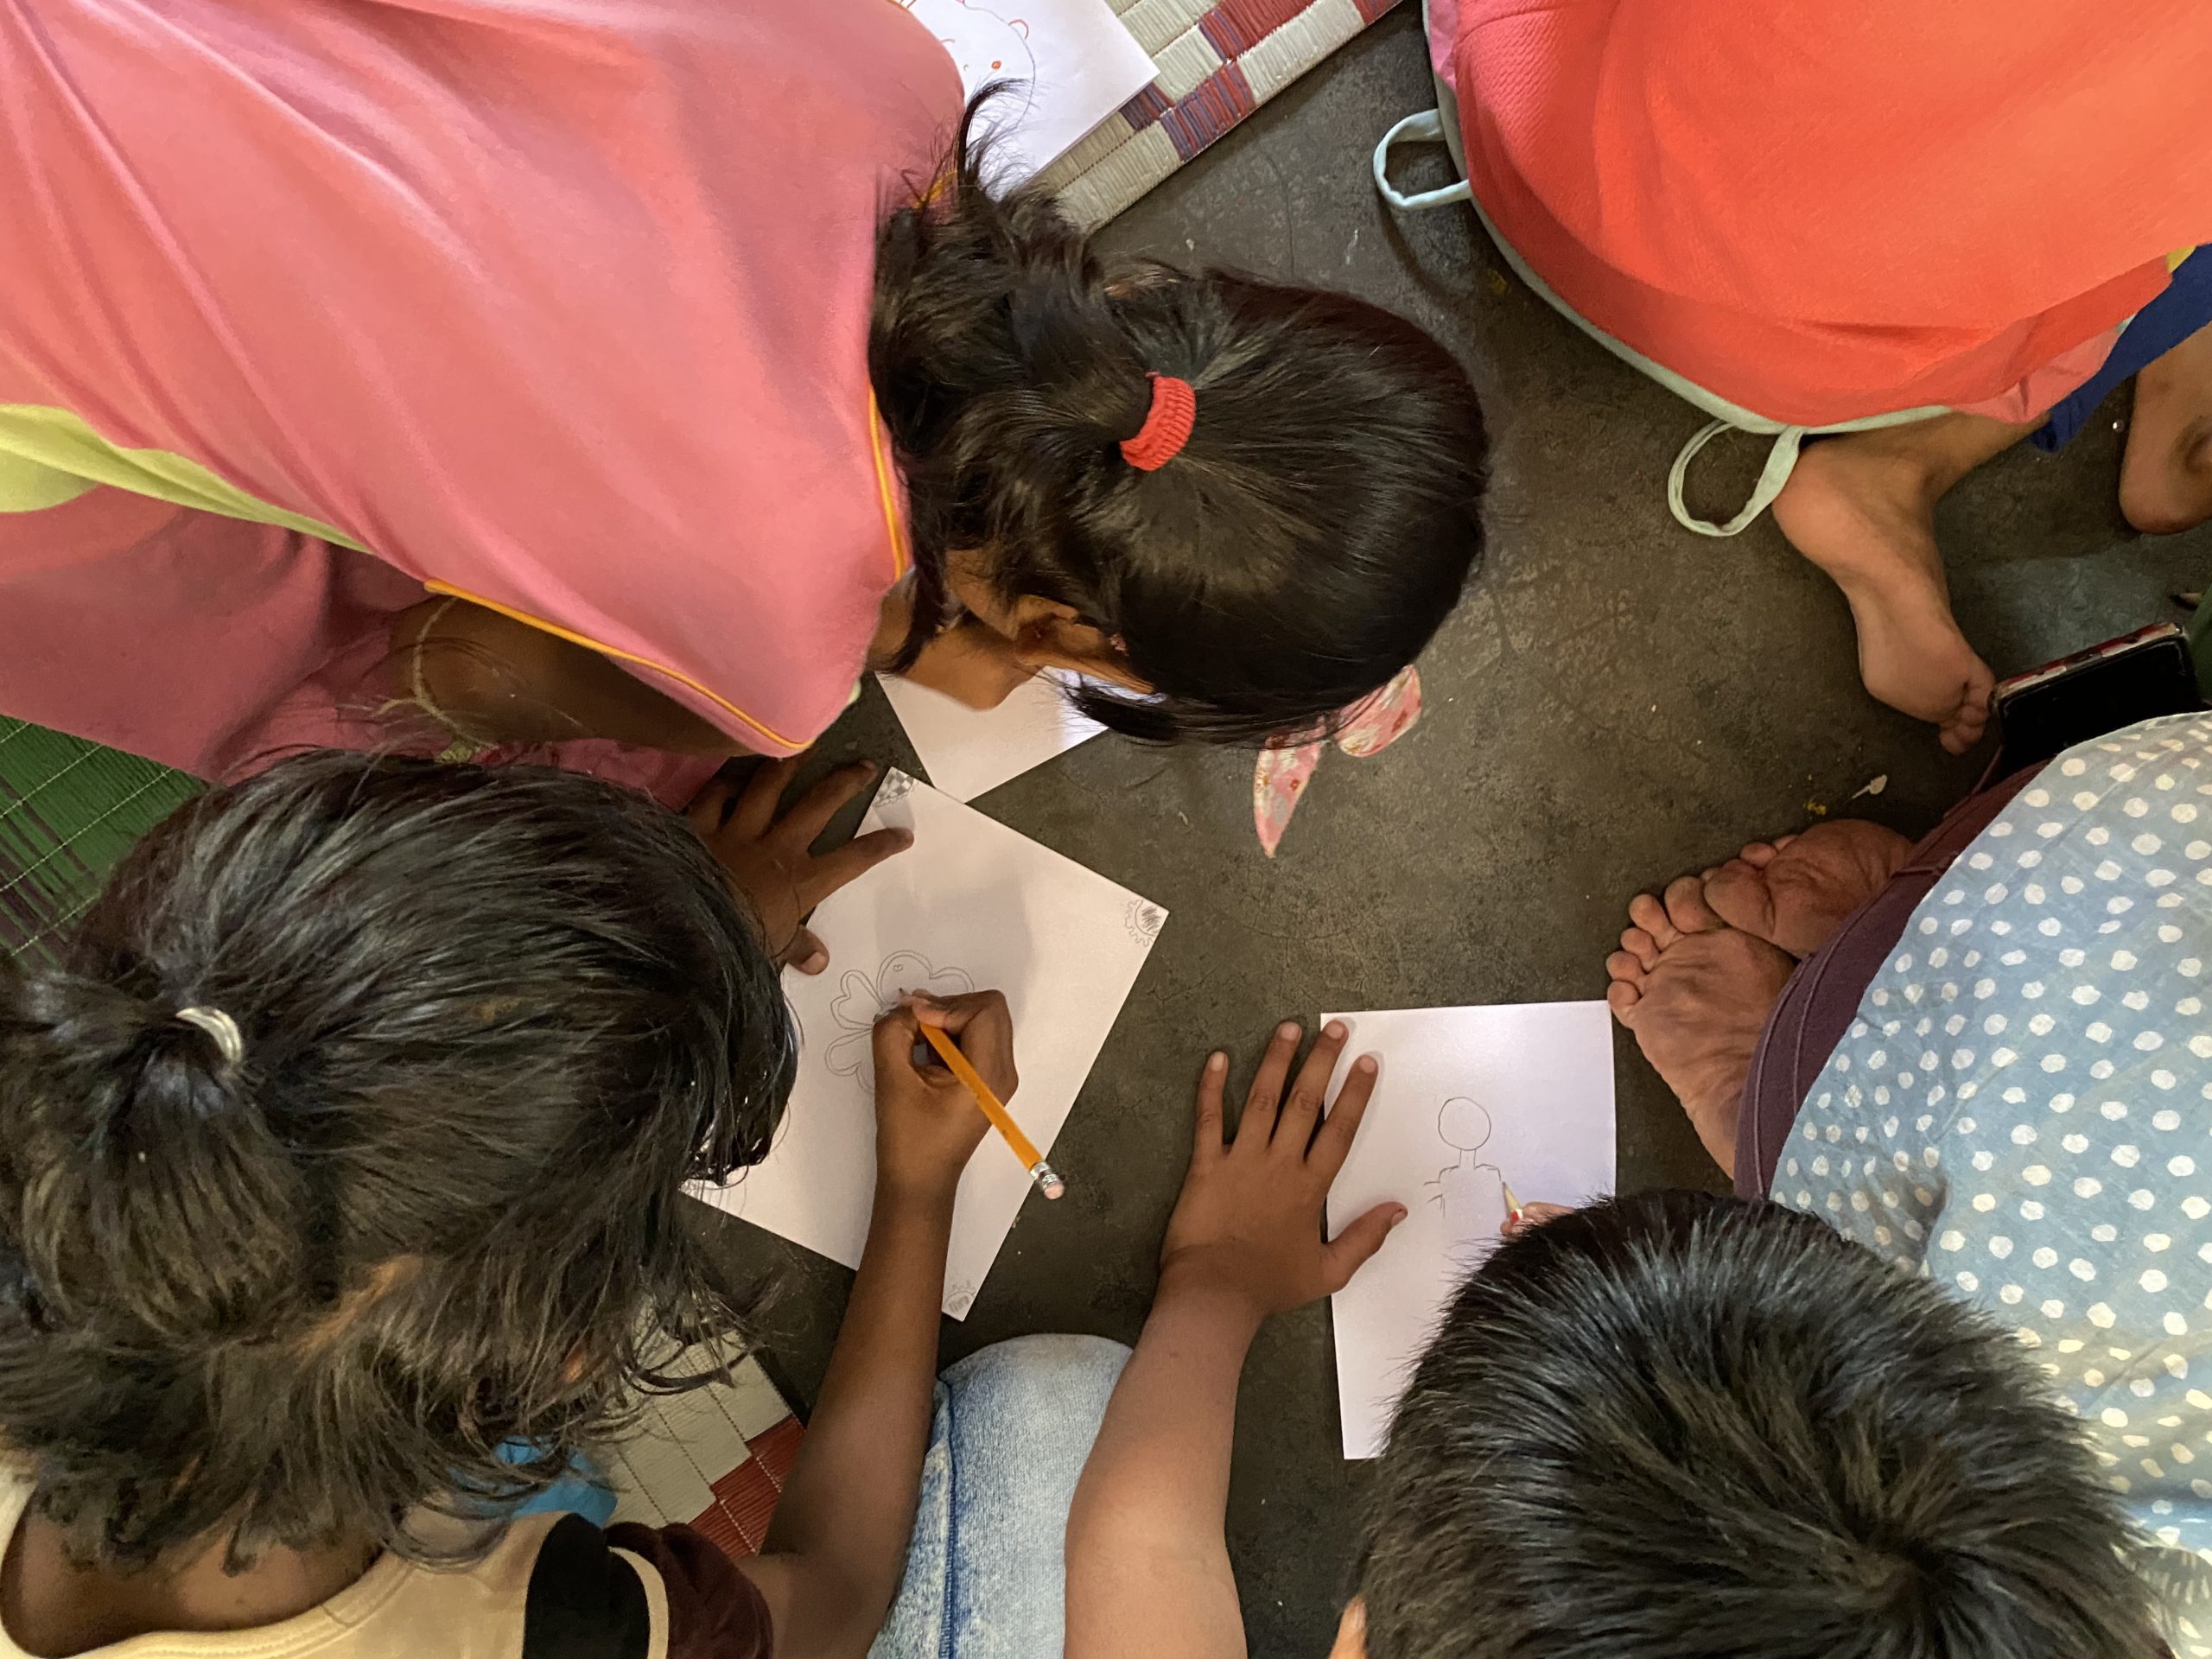 Indian children in shelter making crafts